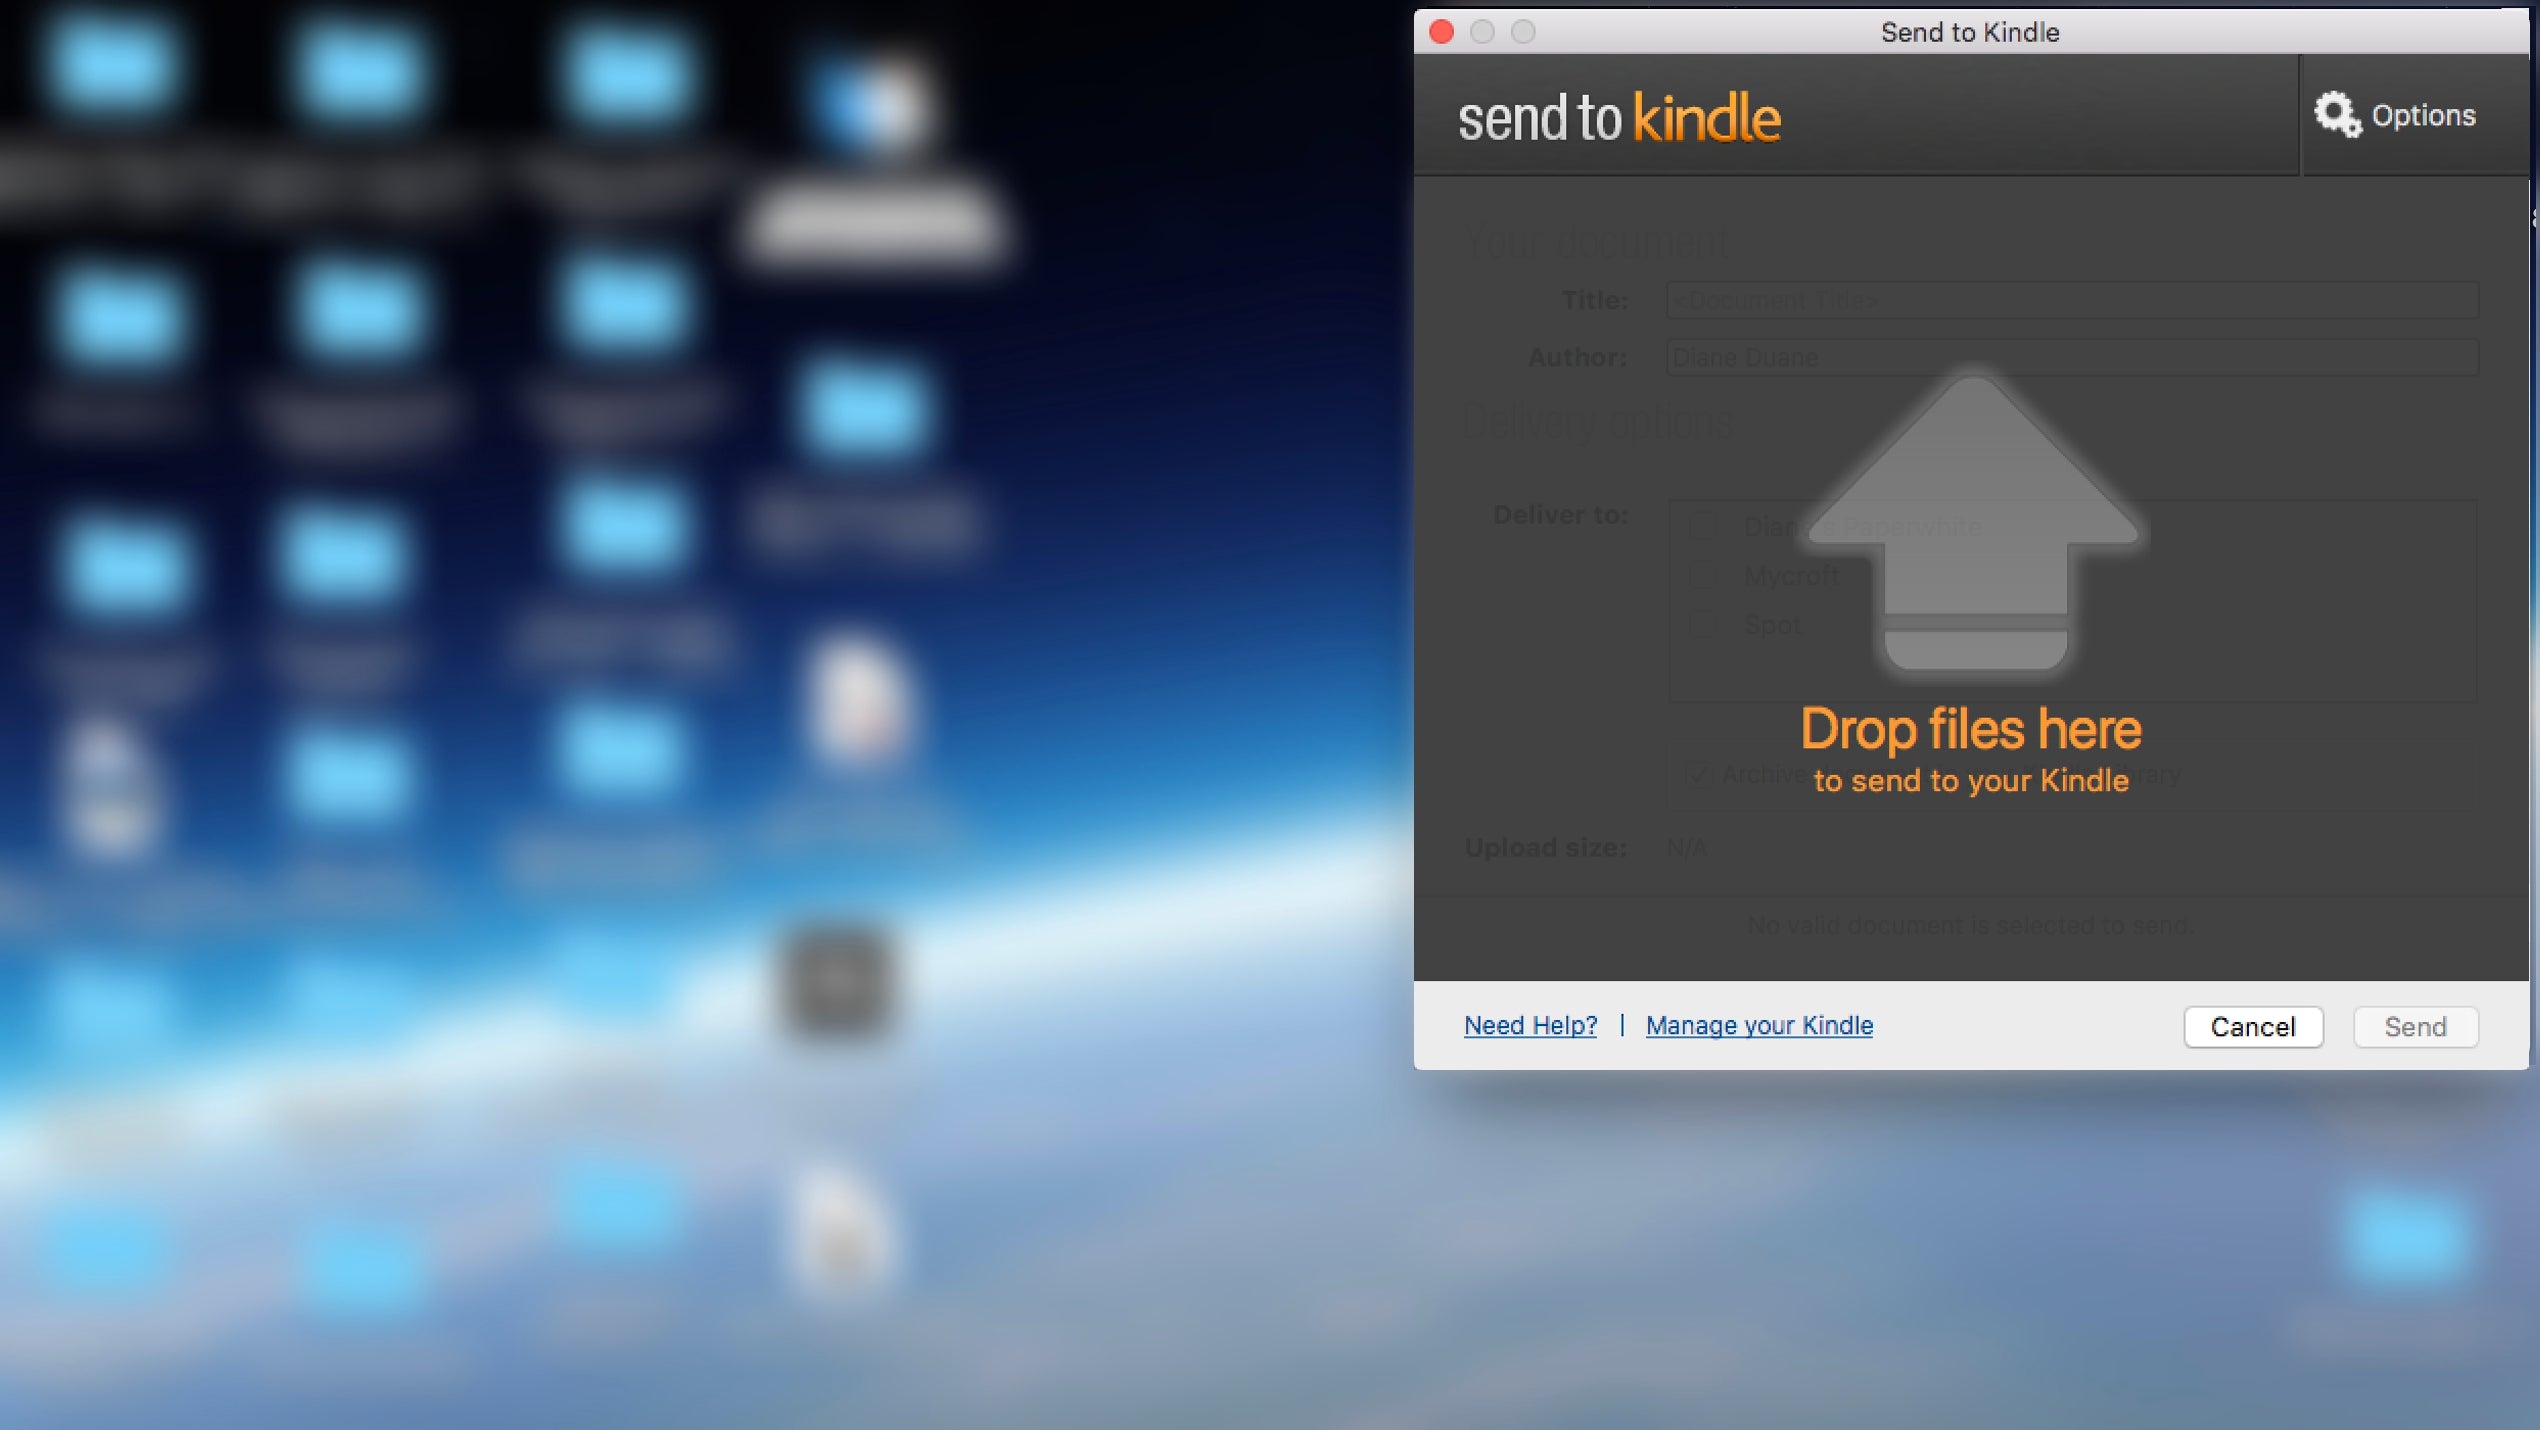 Send to Kindle Start Window